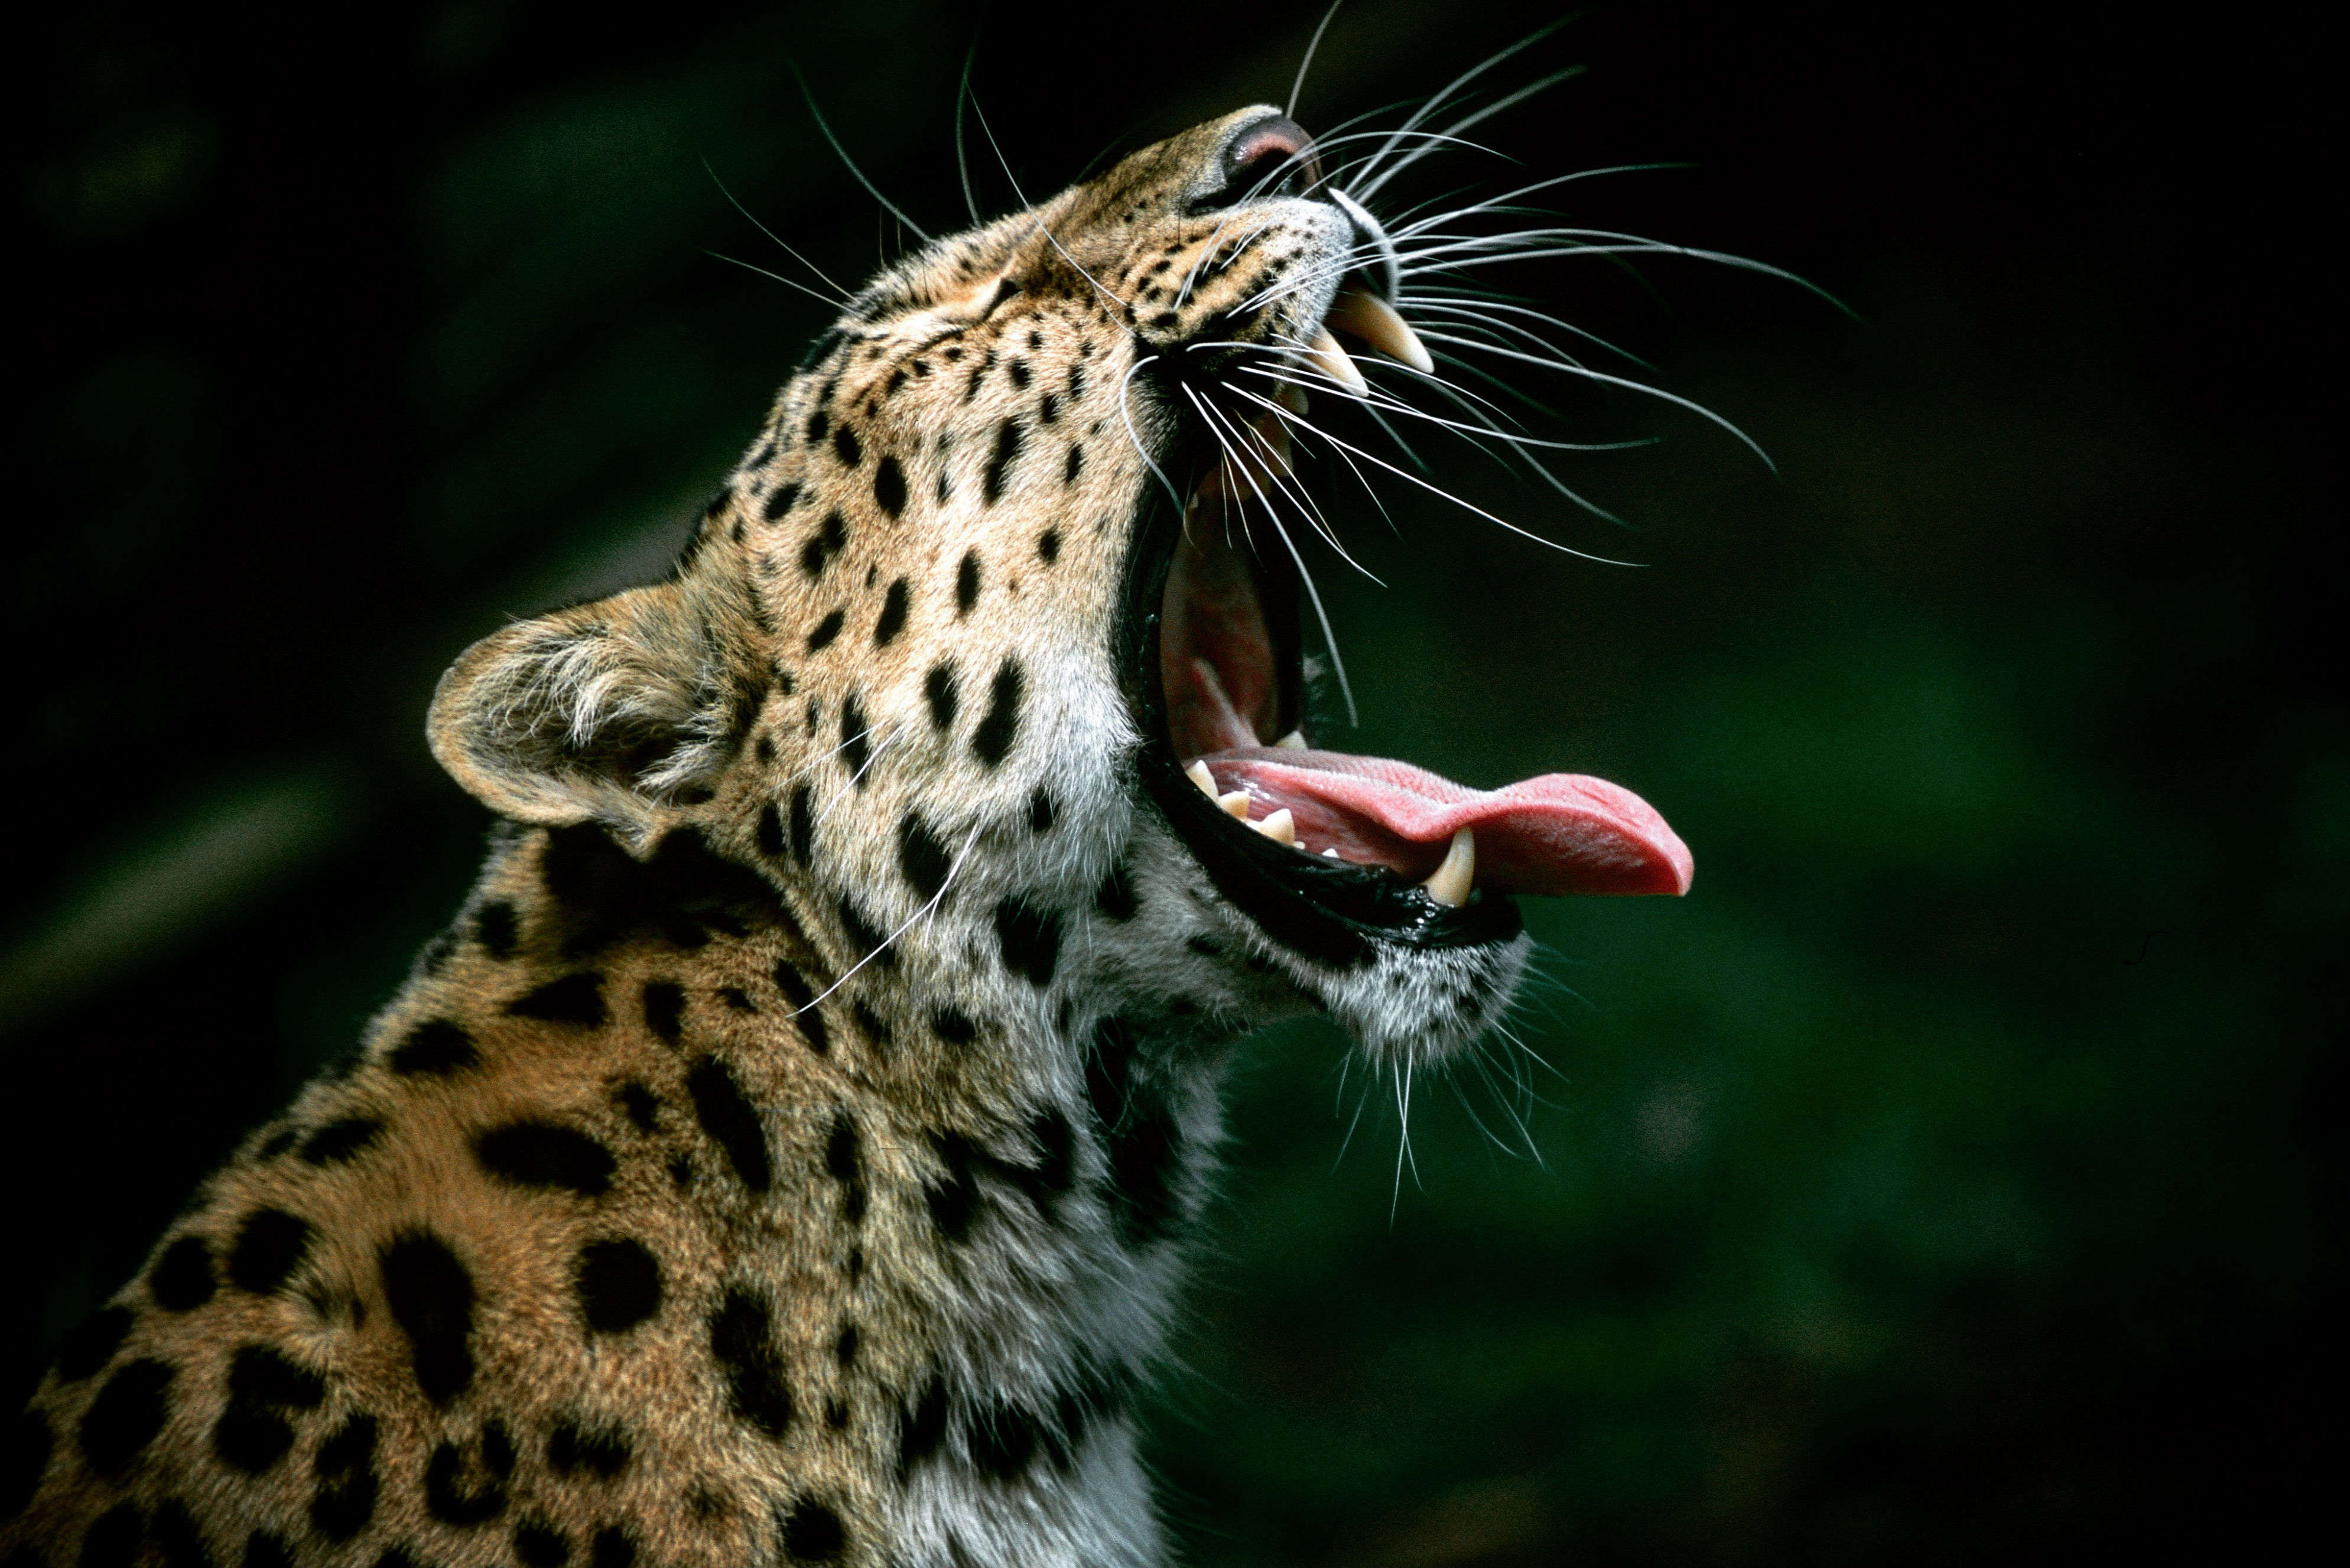 Jhalana Safari Park - come see the leopards